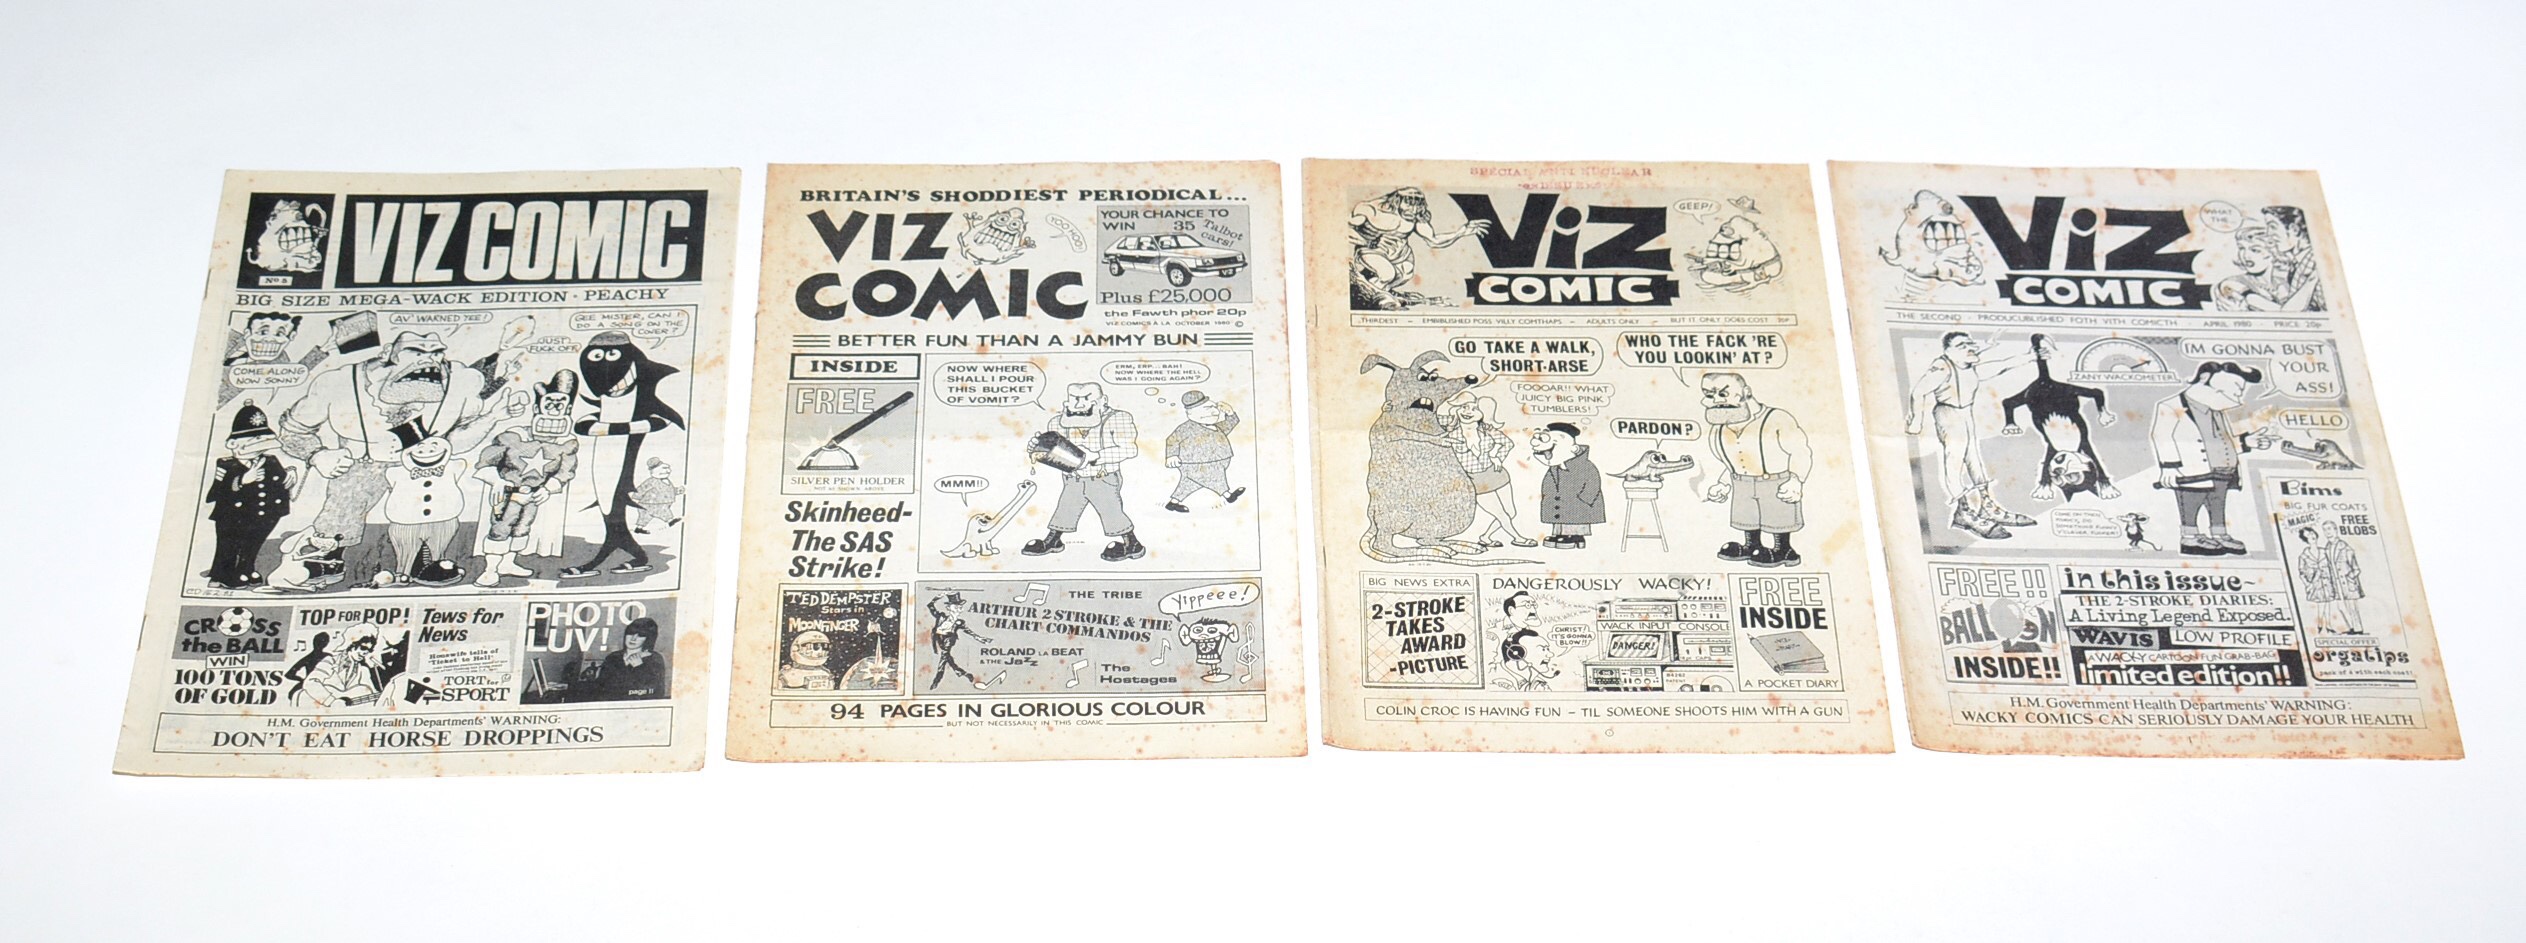 Viz Comic, No's. 2, 3, 4, and 5 - original first printing, April 1980-March 1981.